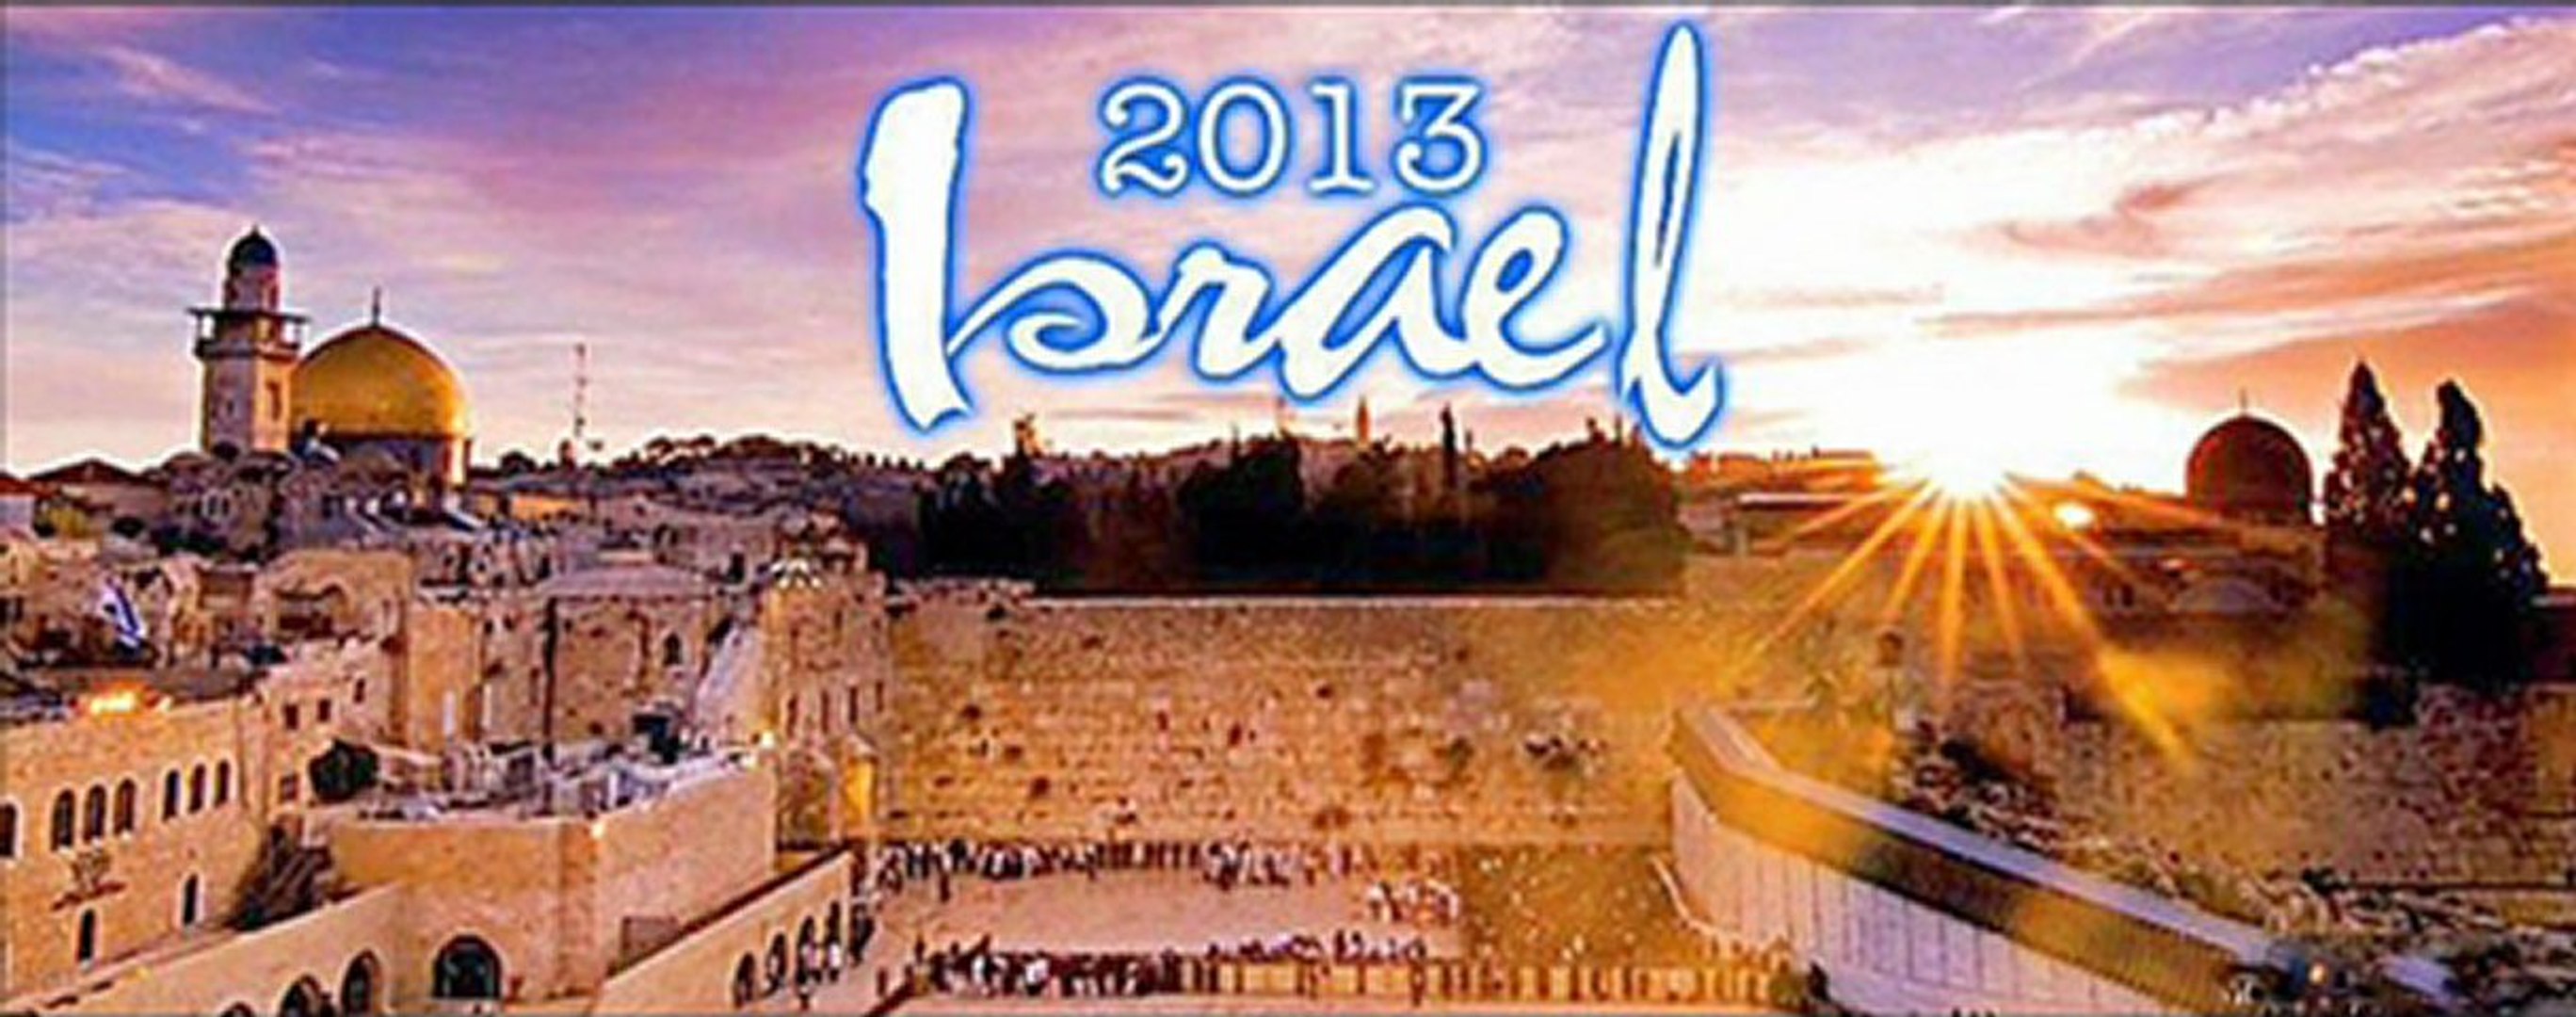 israel 2013